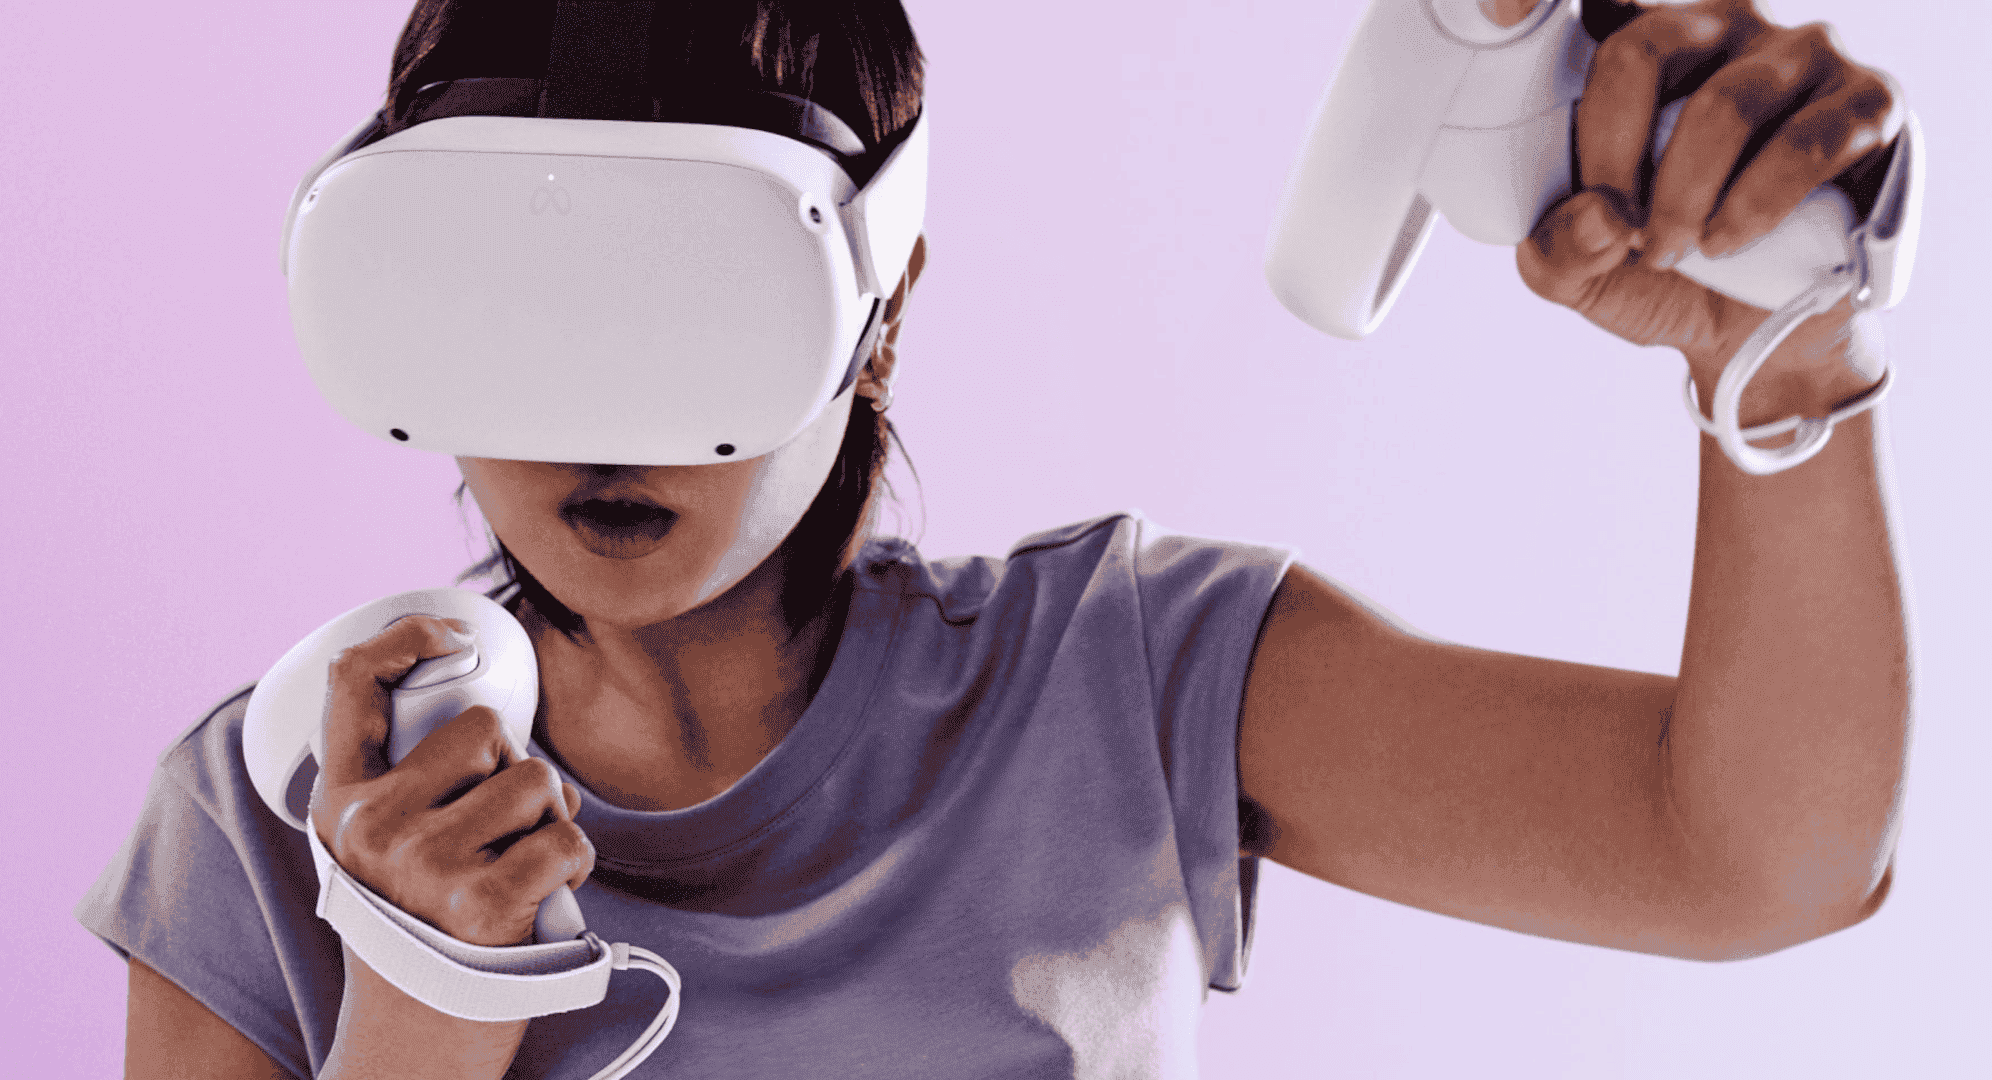 Microsoft Flight Simulator In VR Is STUNNING 